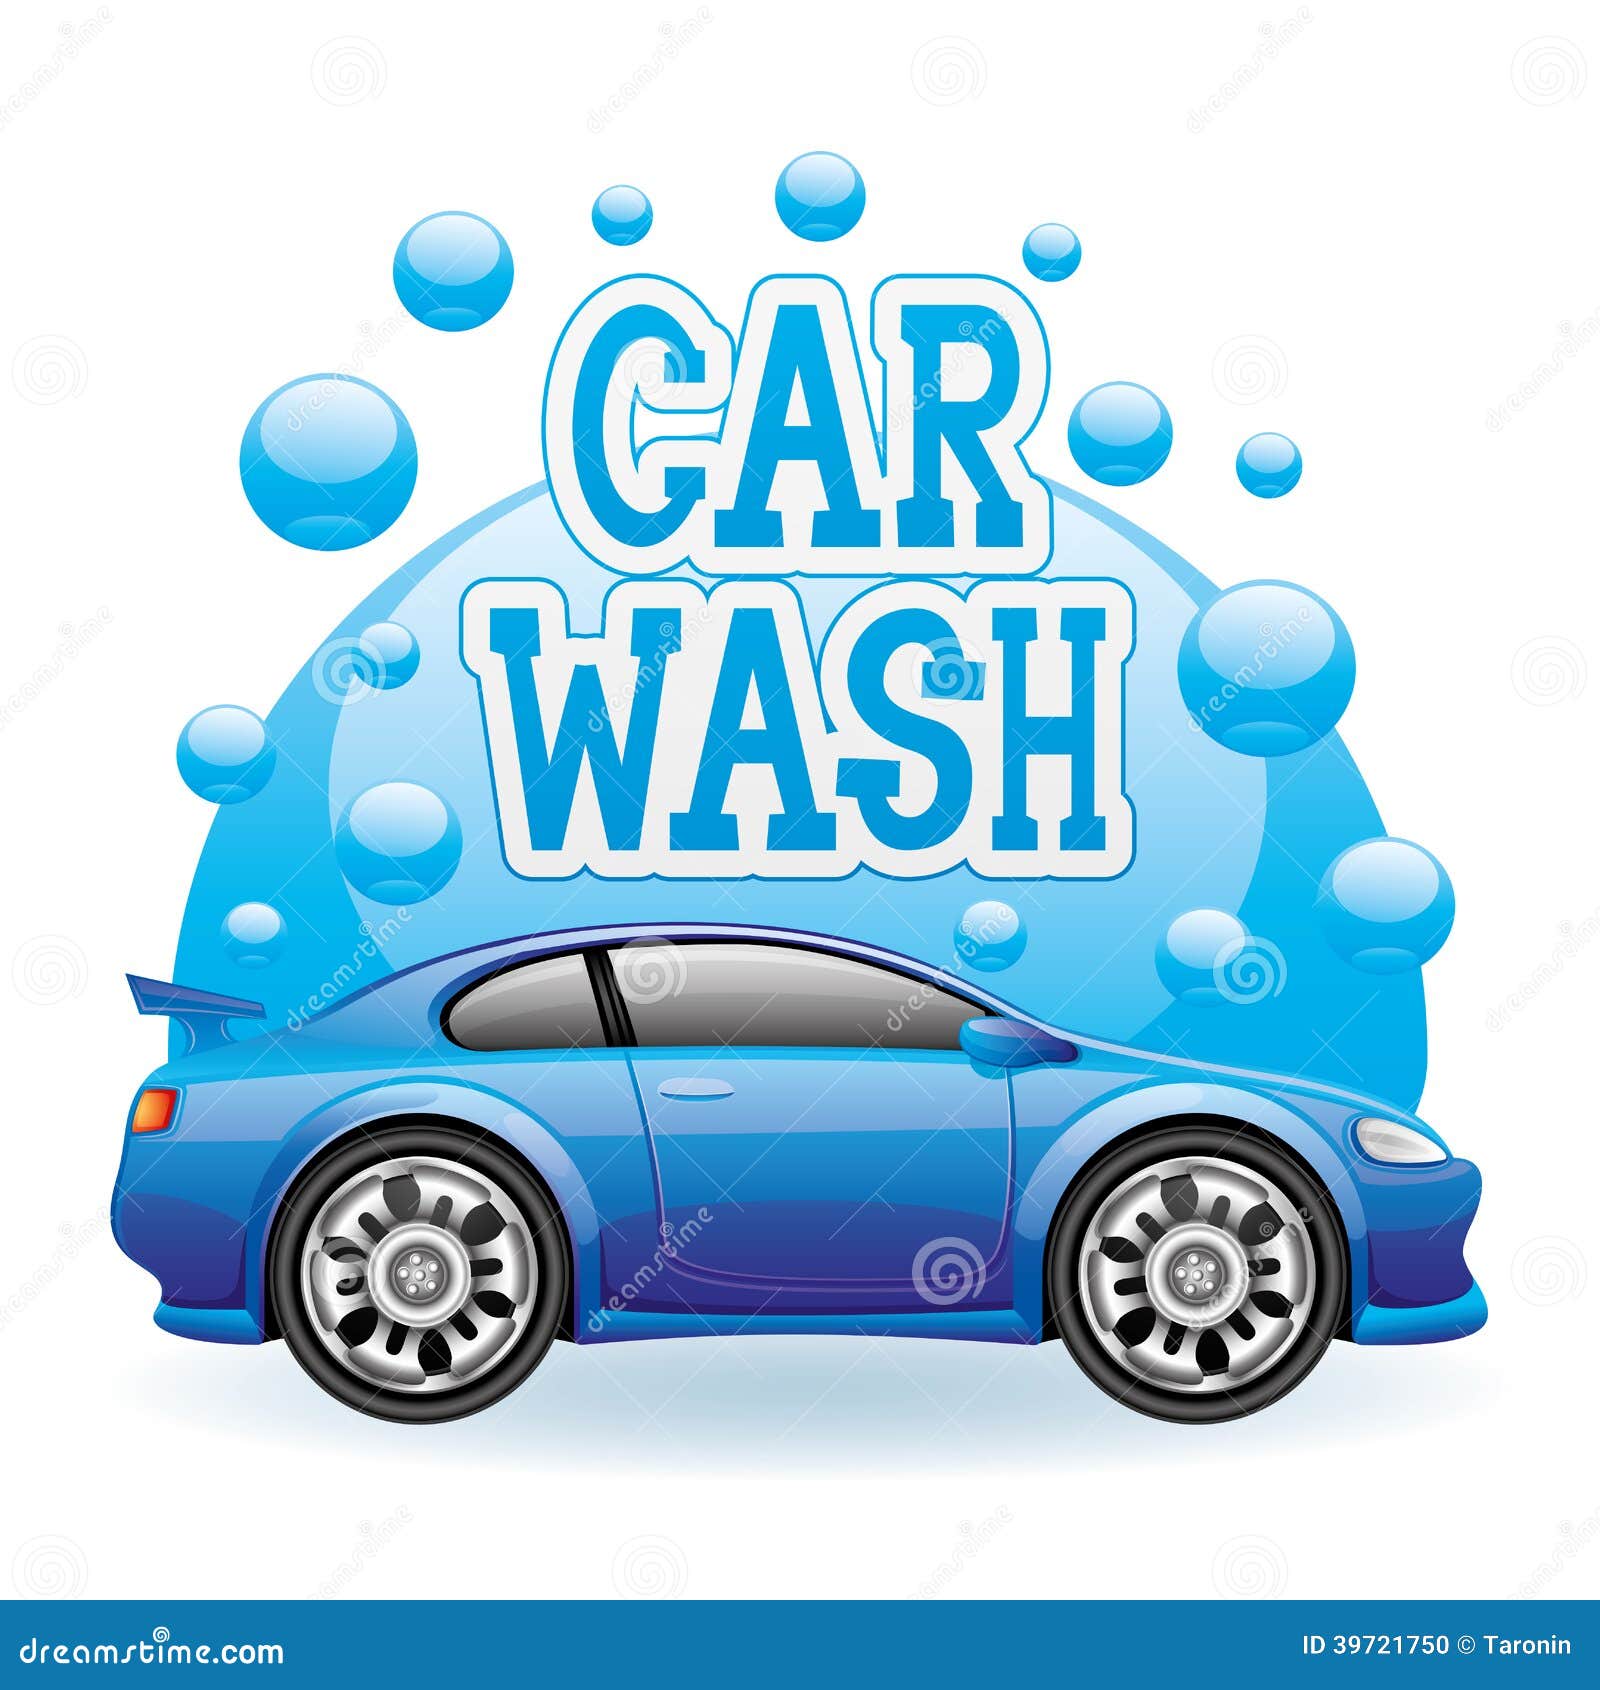 clipart car wash free - photo #40